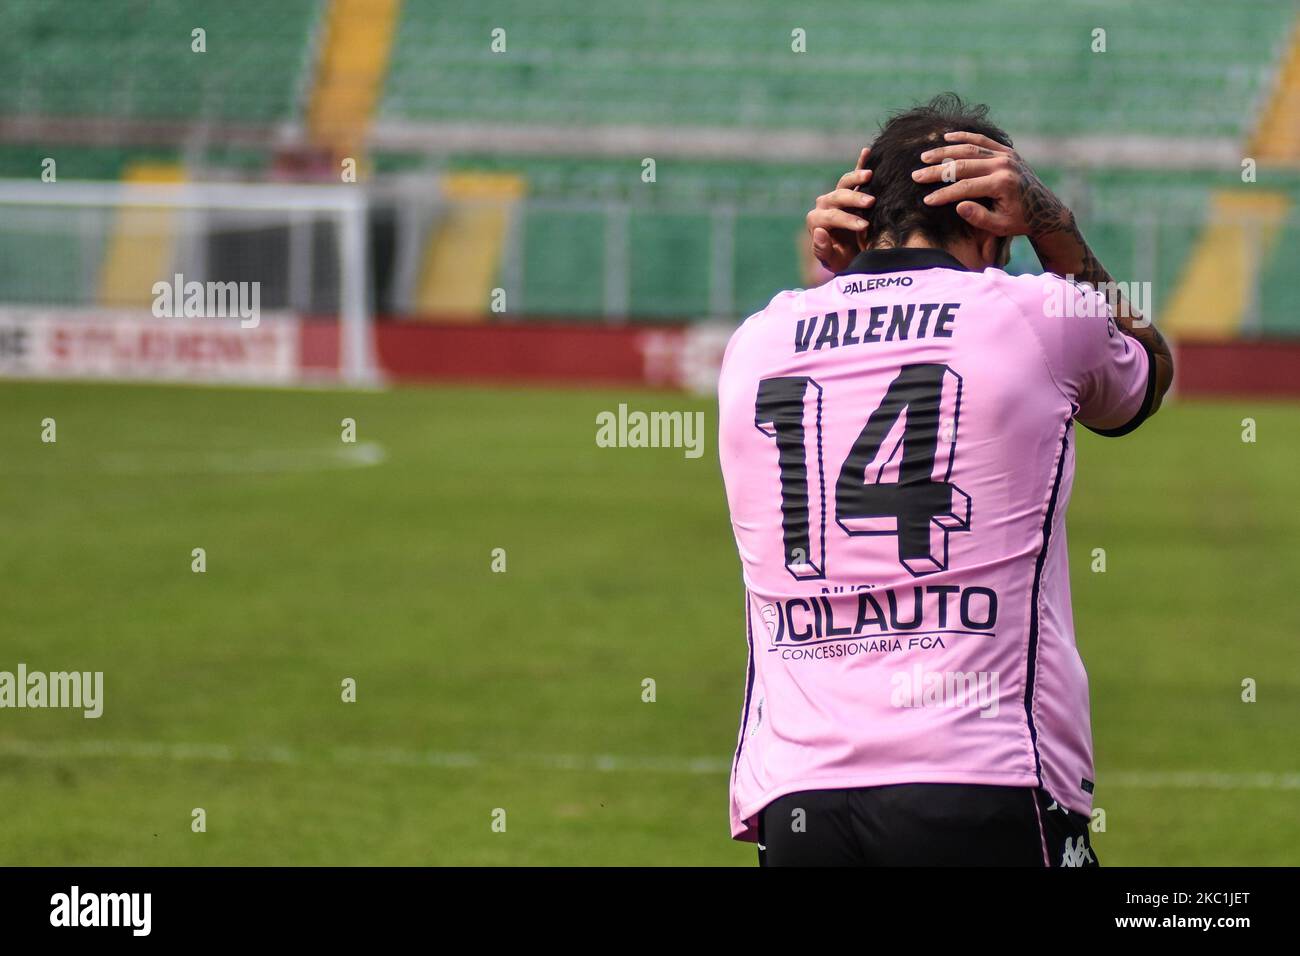 Palermo-Avellino 1-0: photogallery - Palermo F.C.